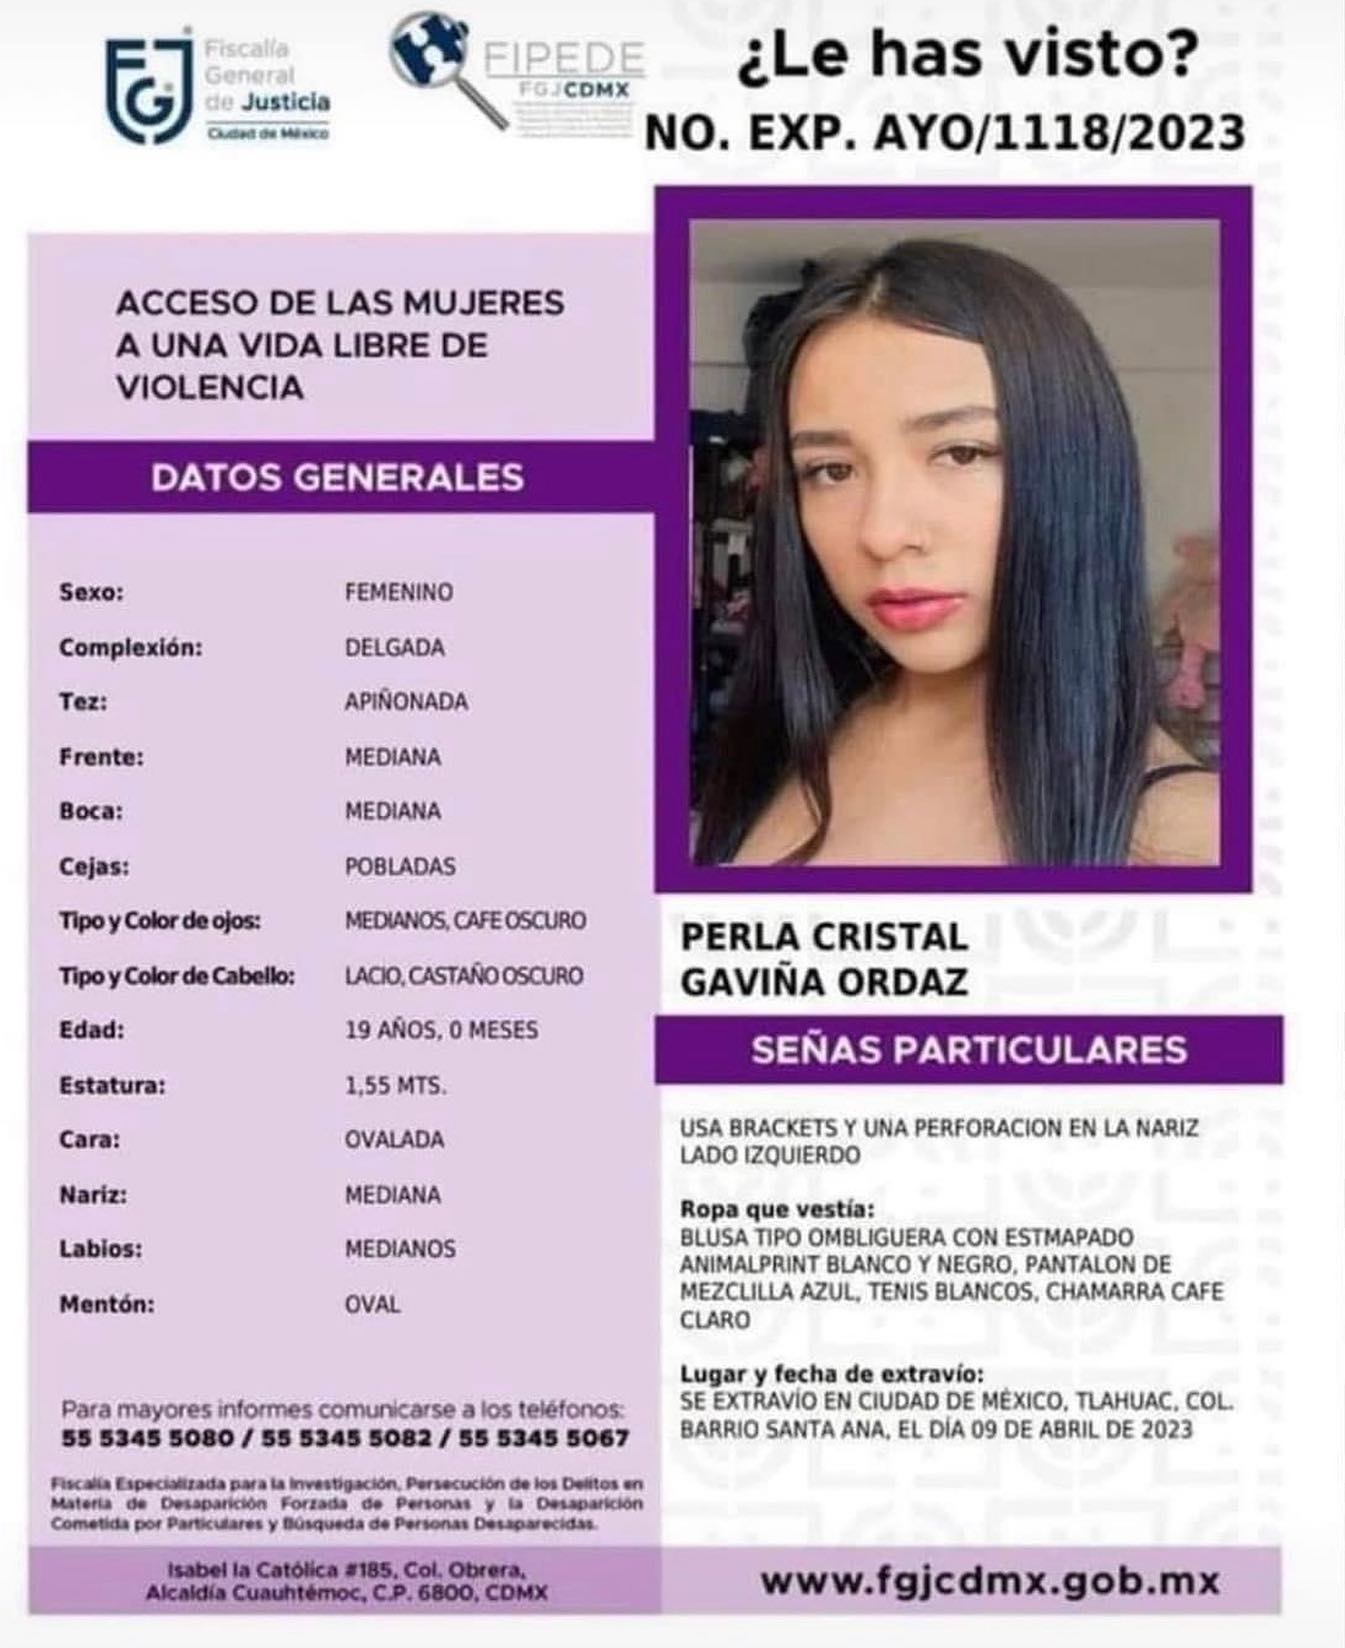 Perla Cristal was last seen in León, Guanajuato.  She was found lifeless days later in said entity (FGJCDMX)